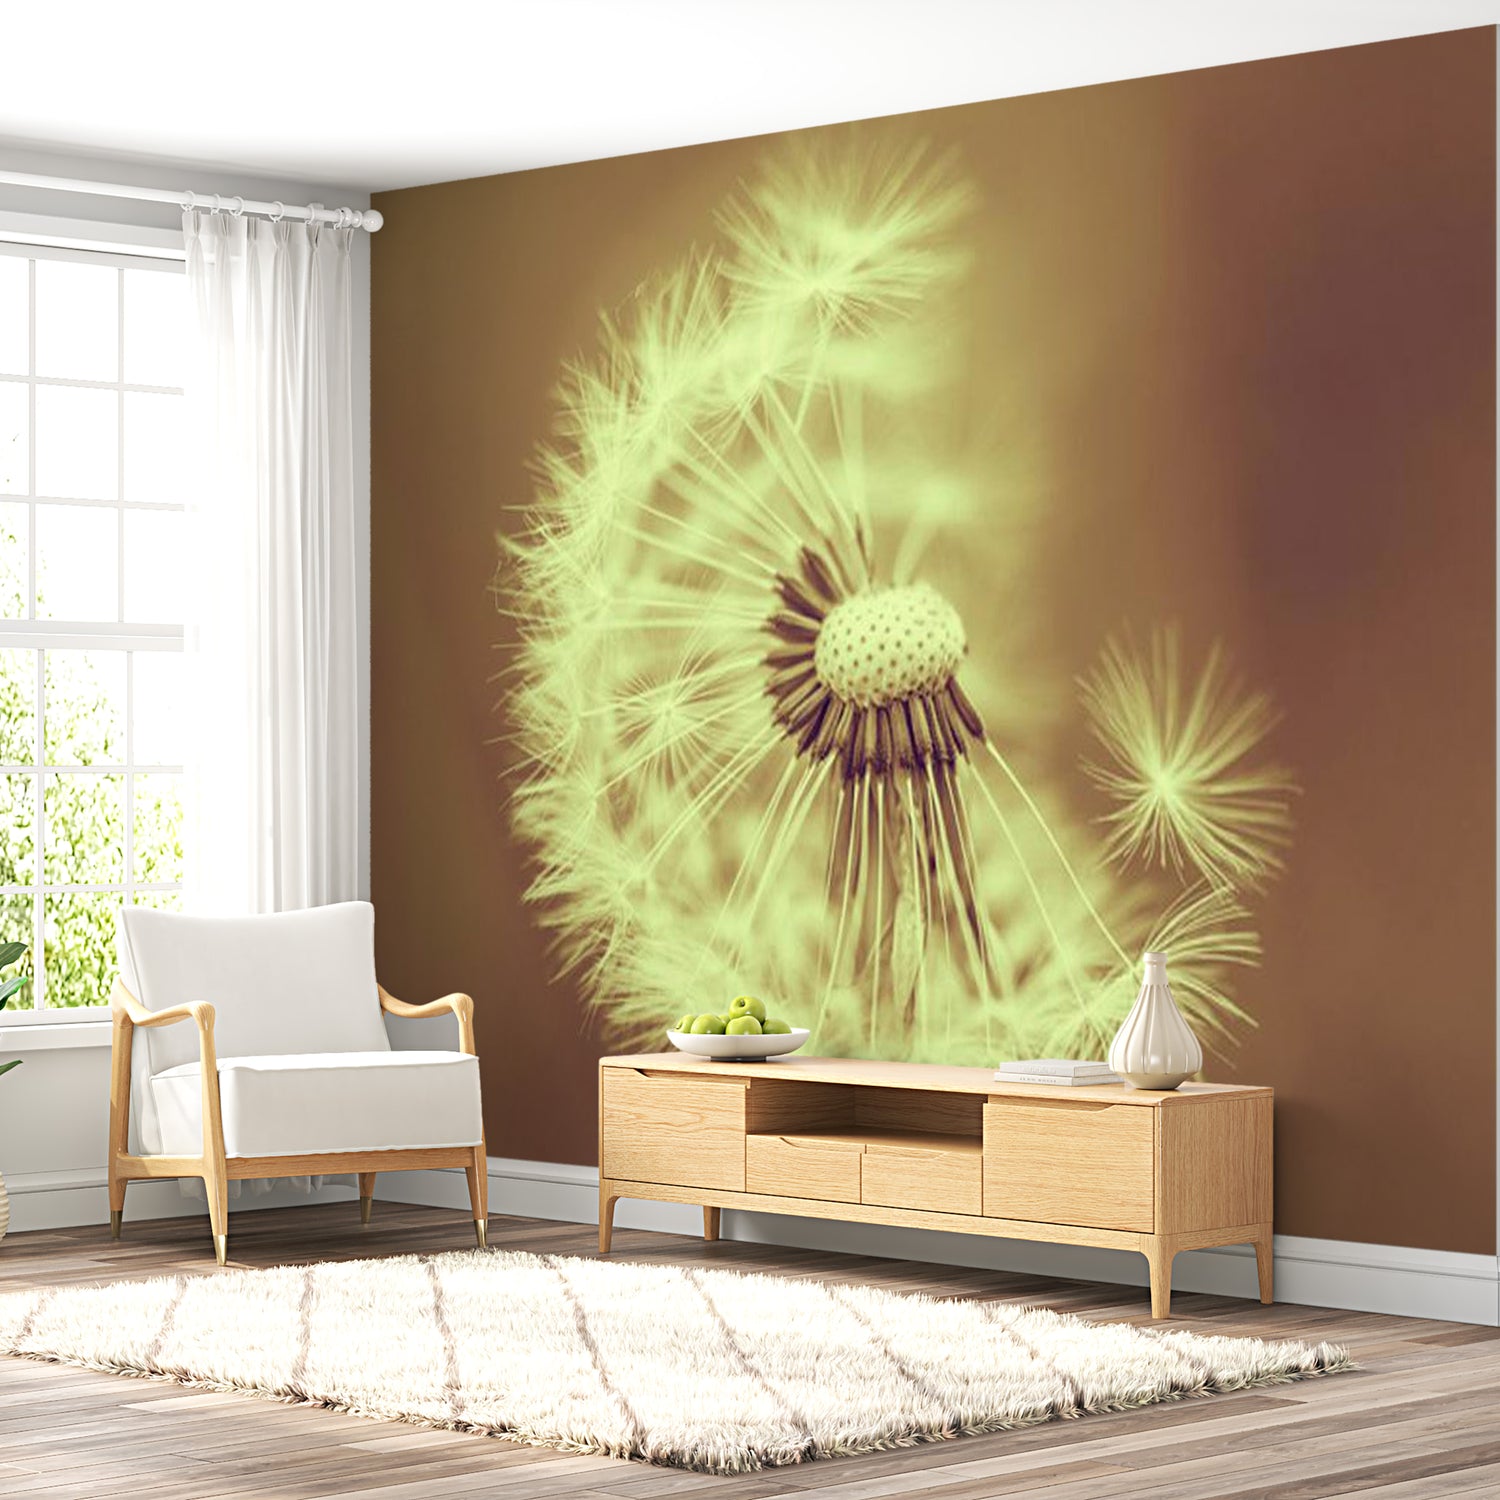 Floral Wallpaper Wall Mural - Dandelion In Summer Light